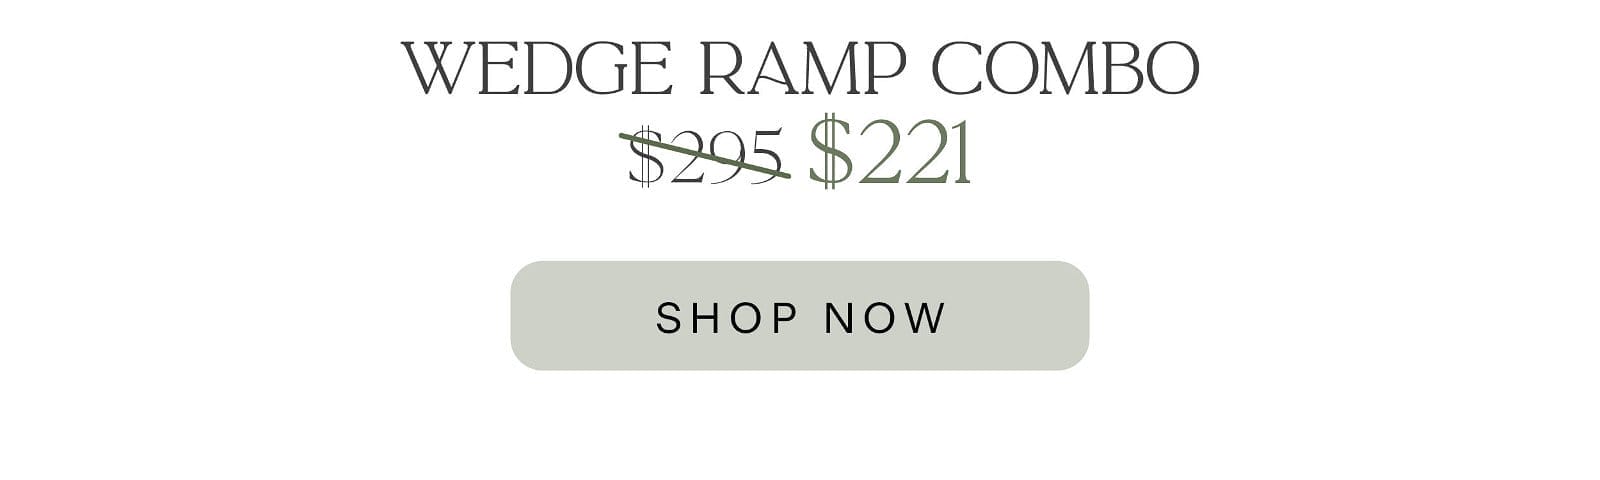 Wedge Ramp Combo \\$221